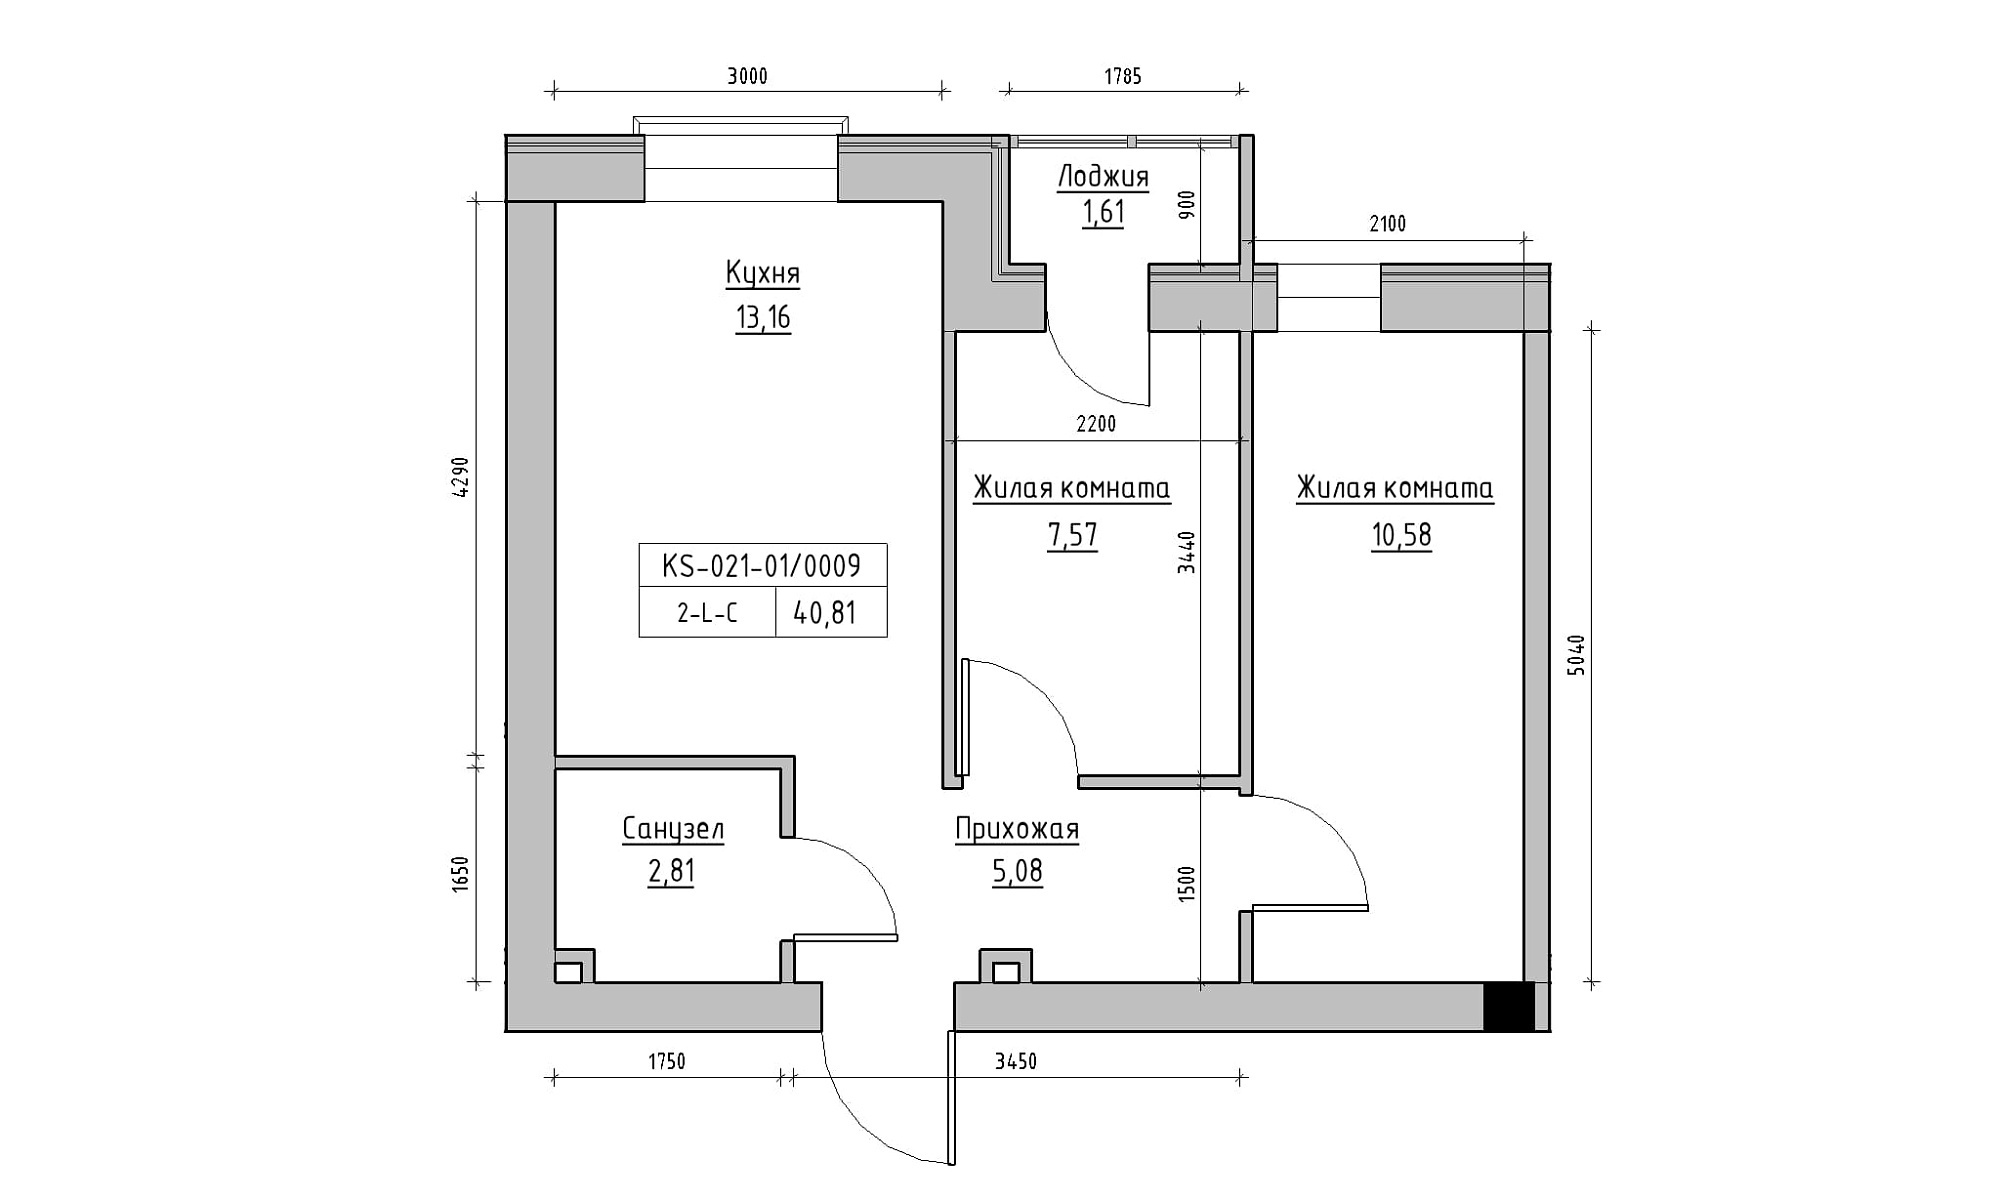 Planning 2-rm flats area 40.81m2, KS-021-01/0009.